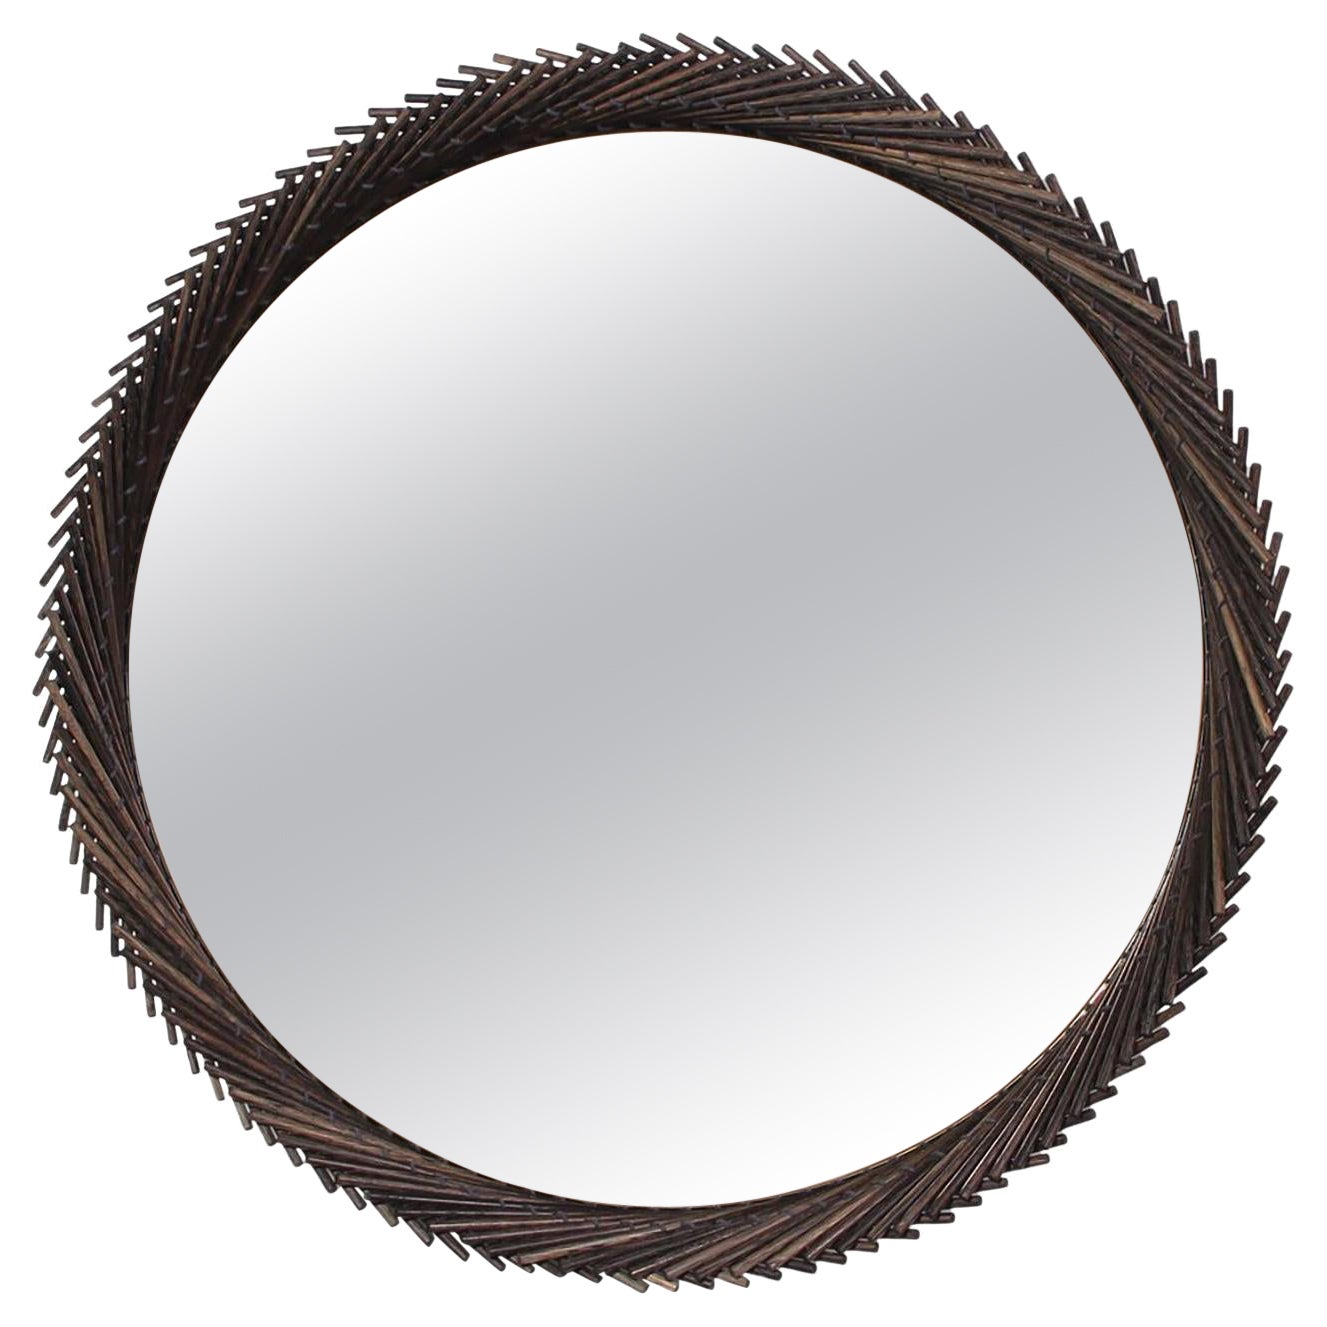 Mooda Round Mirror 36 / Oxidized Oak Wood, Clear Mirror by INDO- For Sale